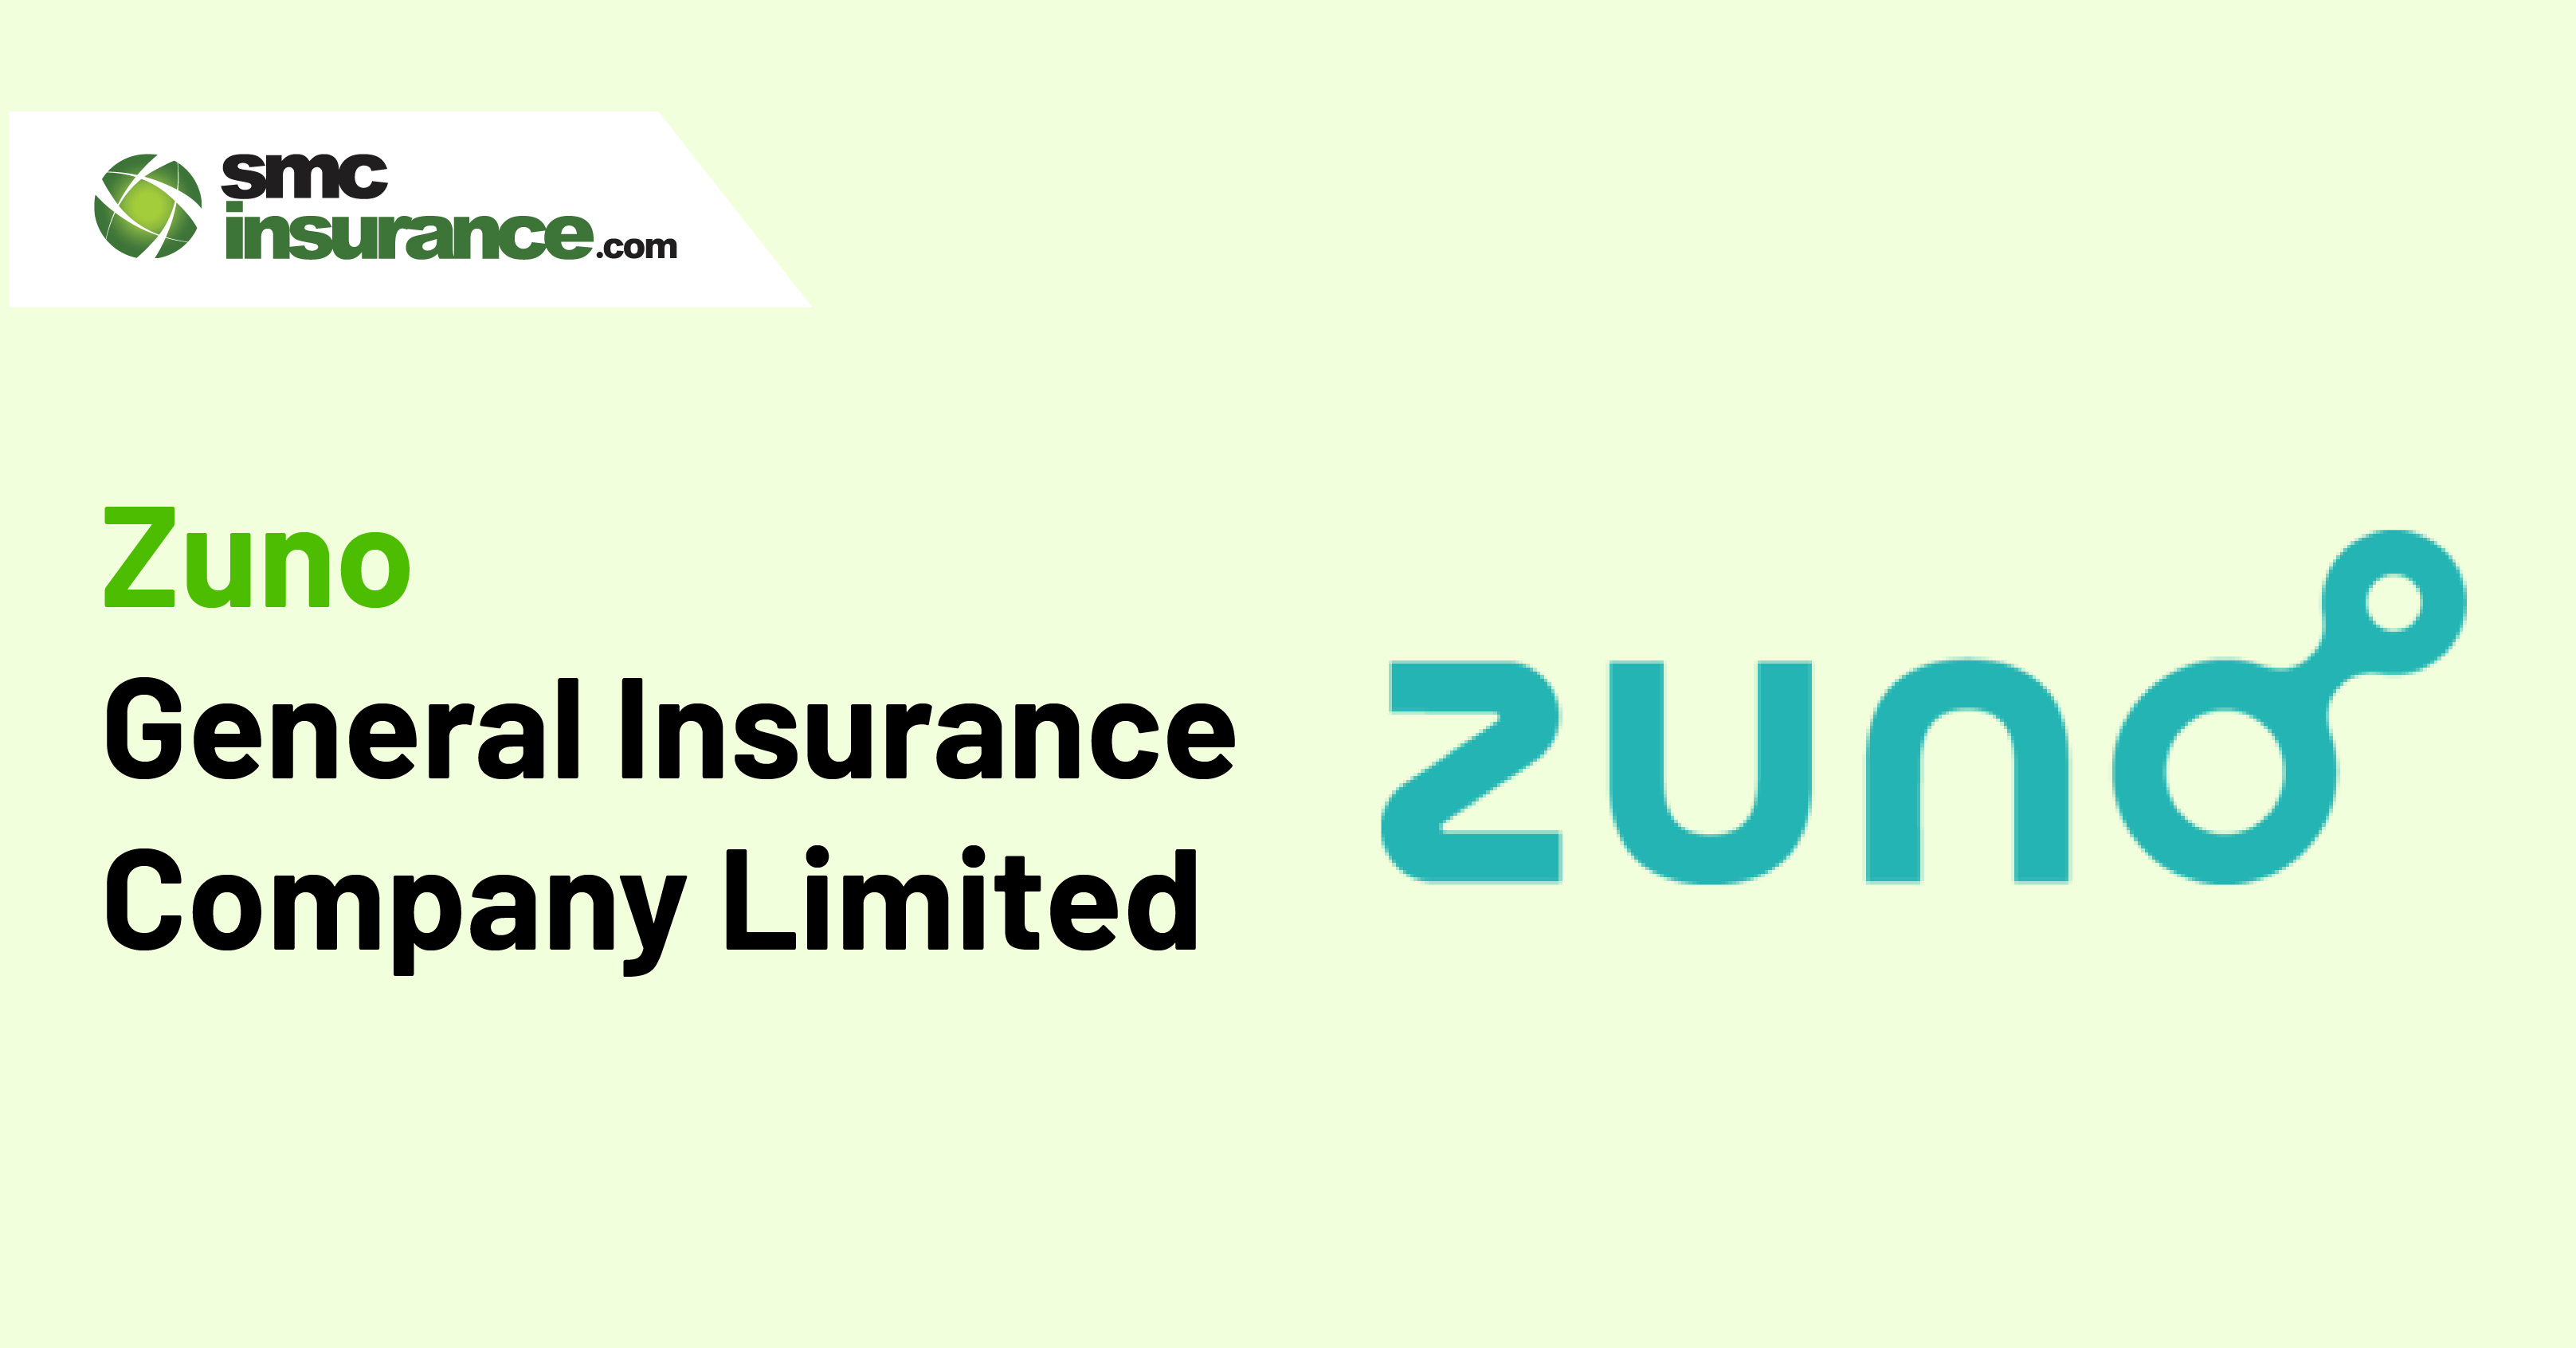 Zuno General Insurance Company Limited